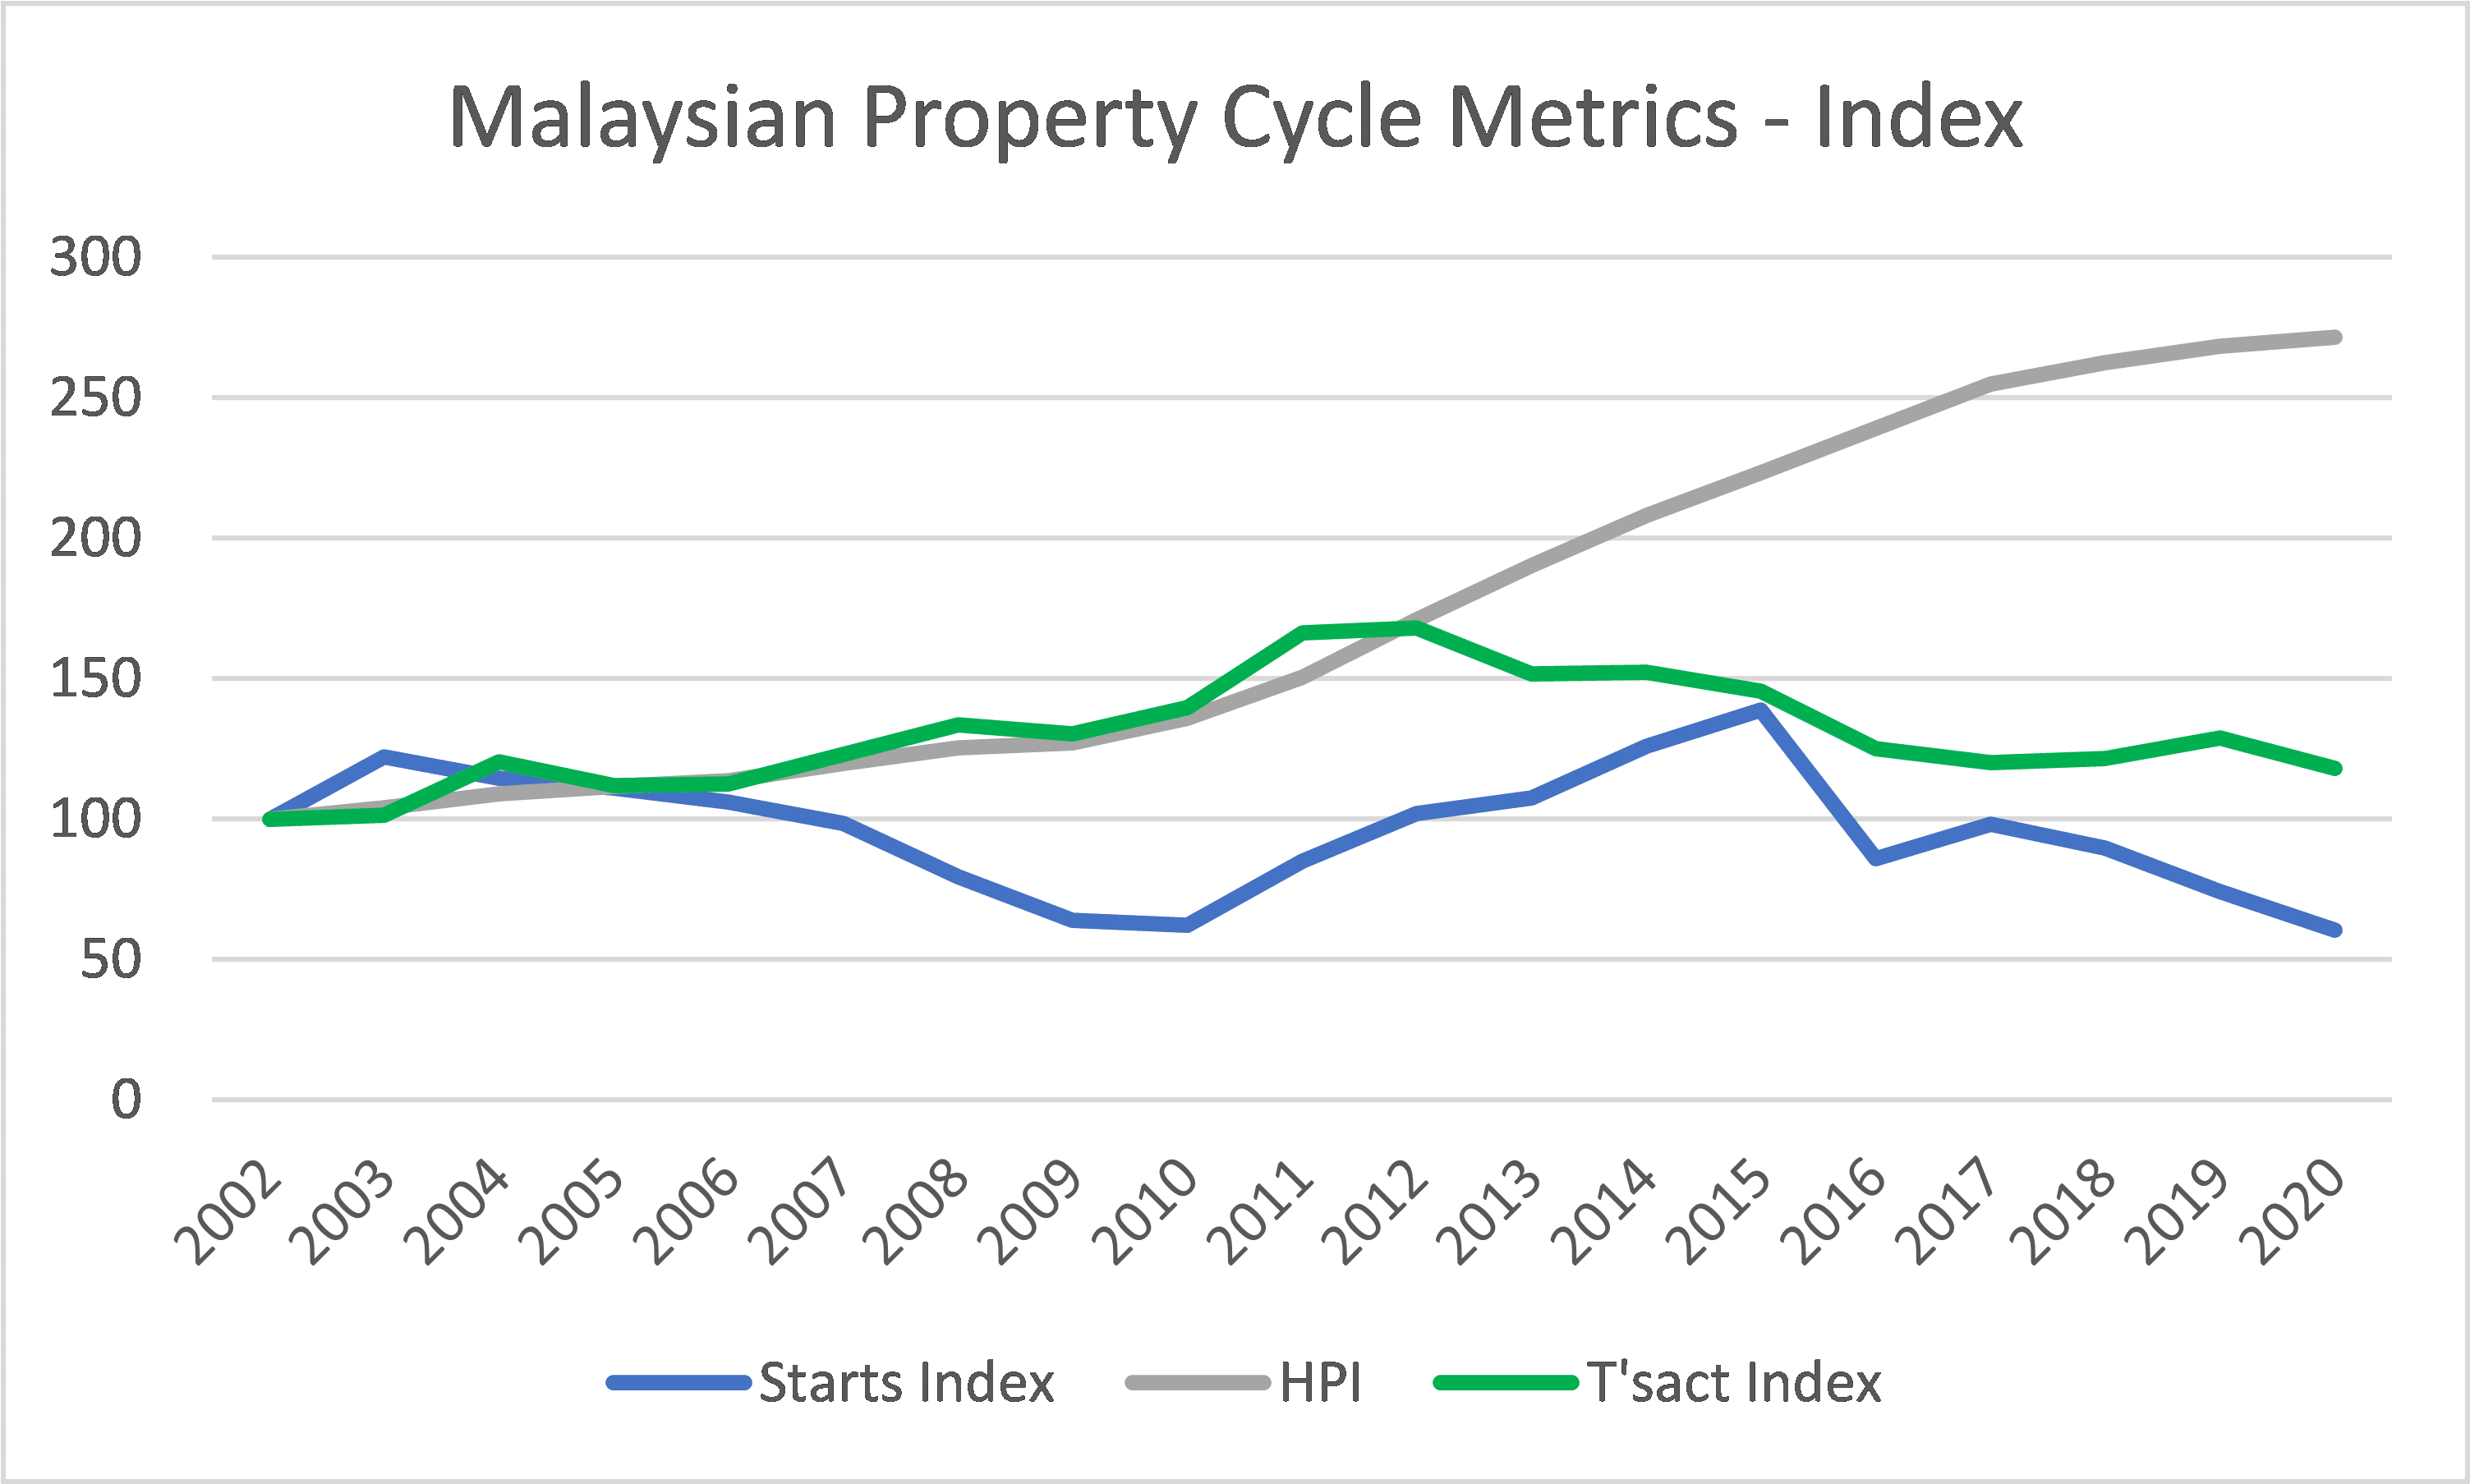 Malaysian property cycle metrics - index trends